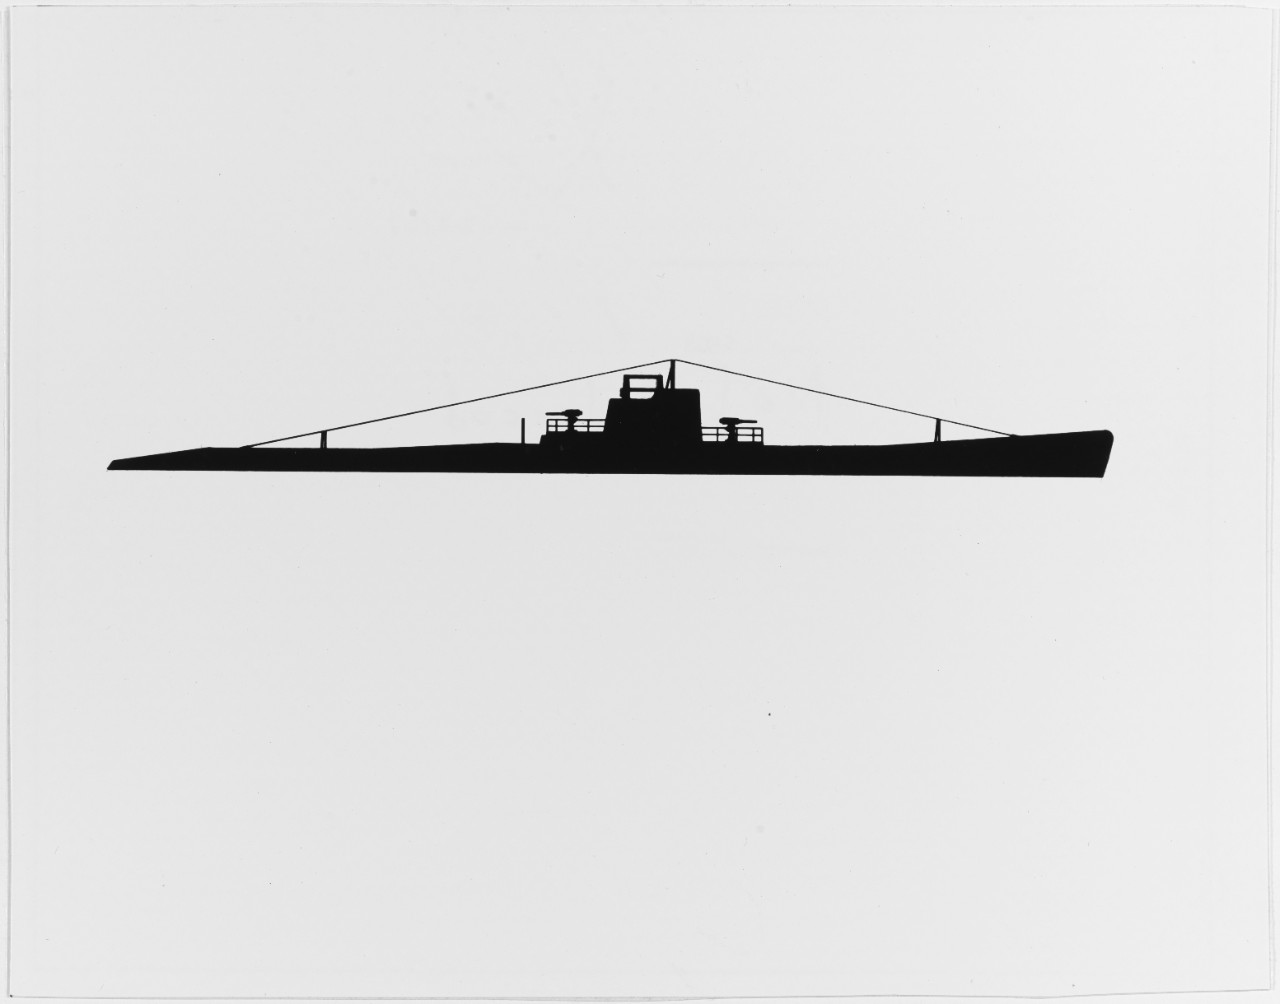 SHCH-IV Class Soviet SS